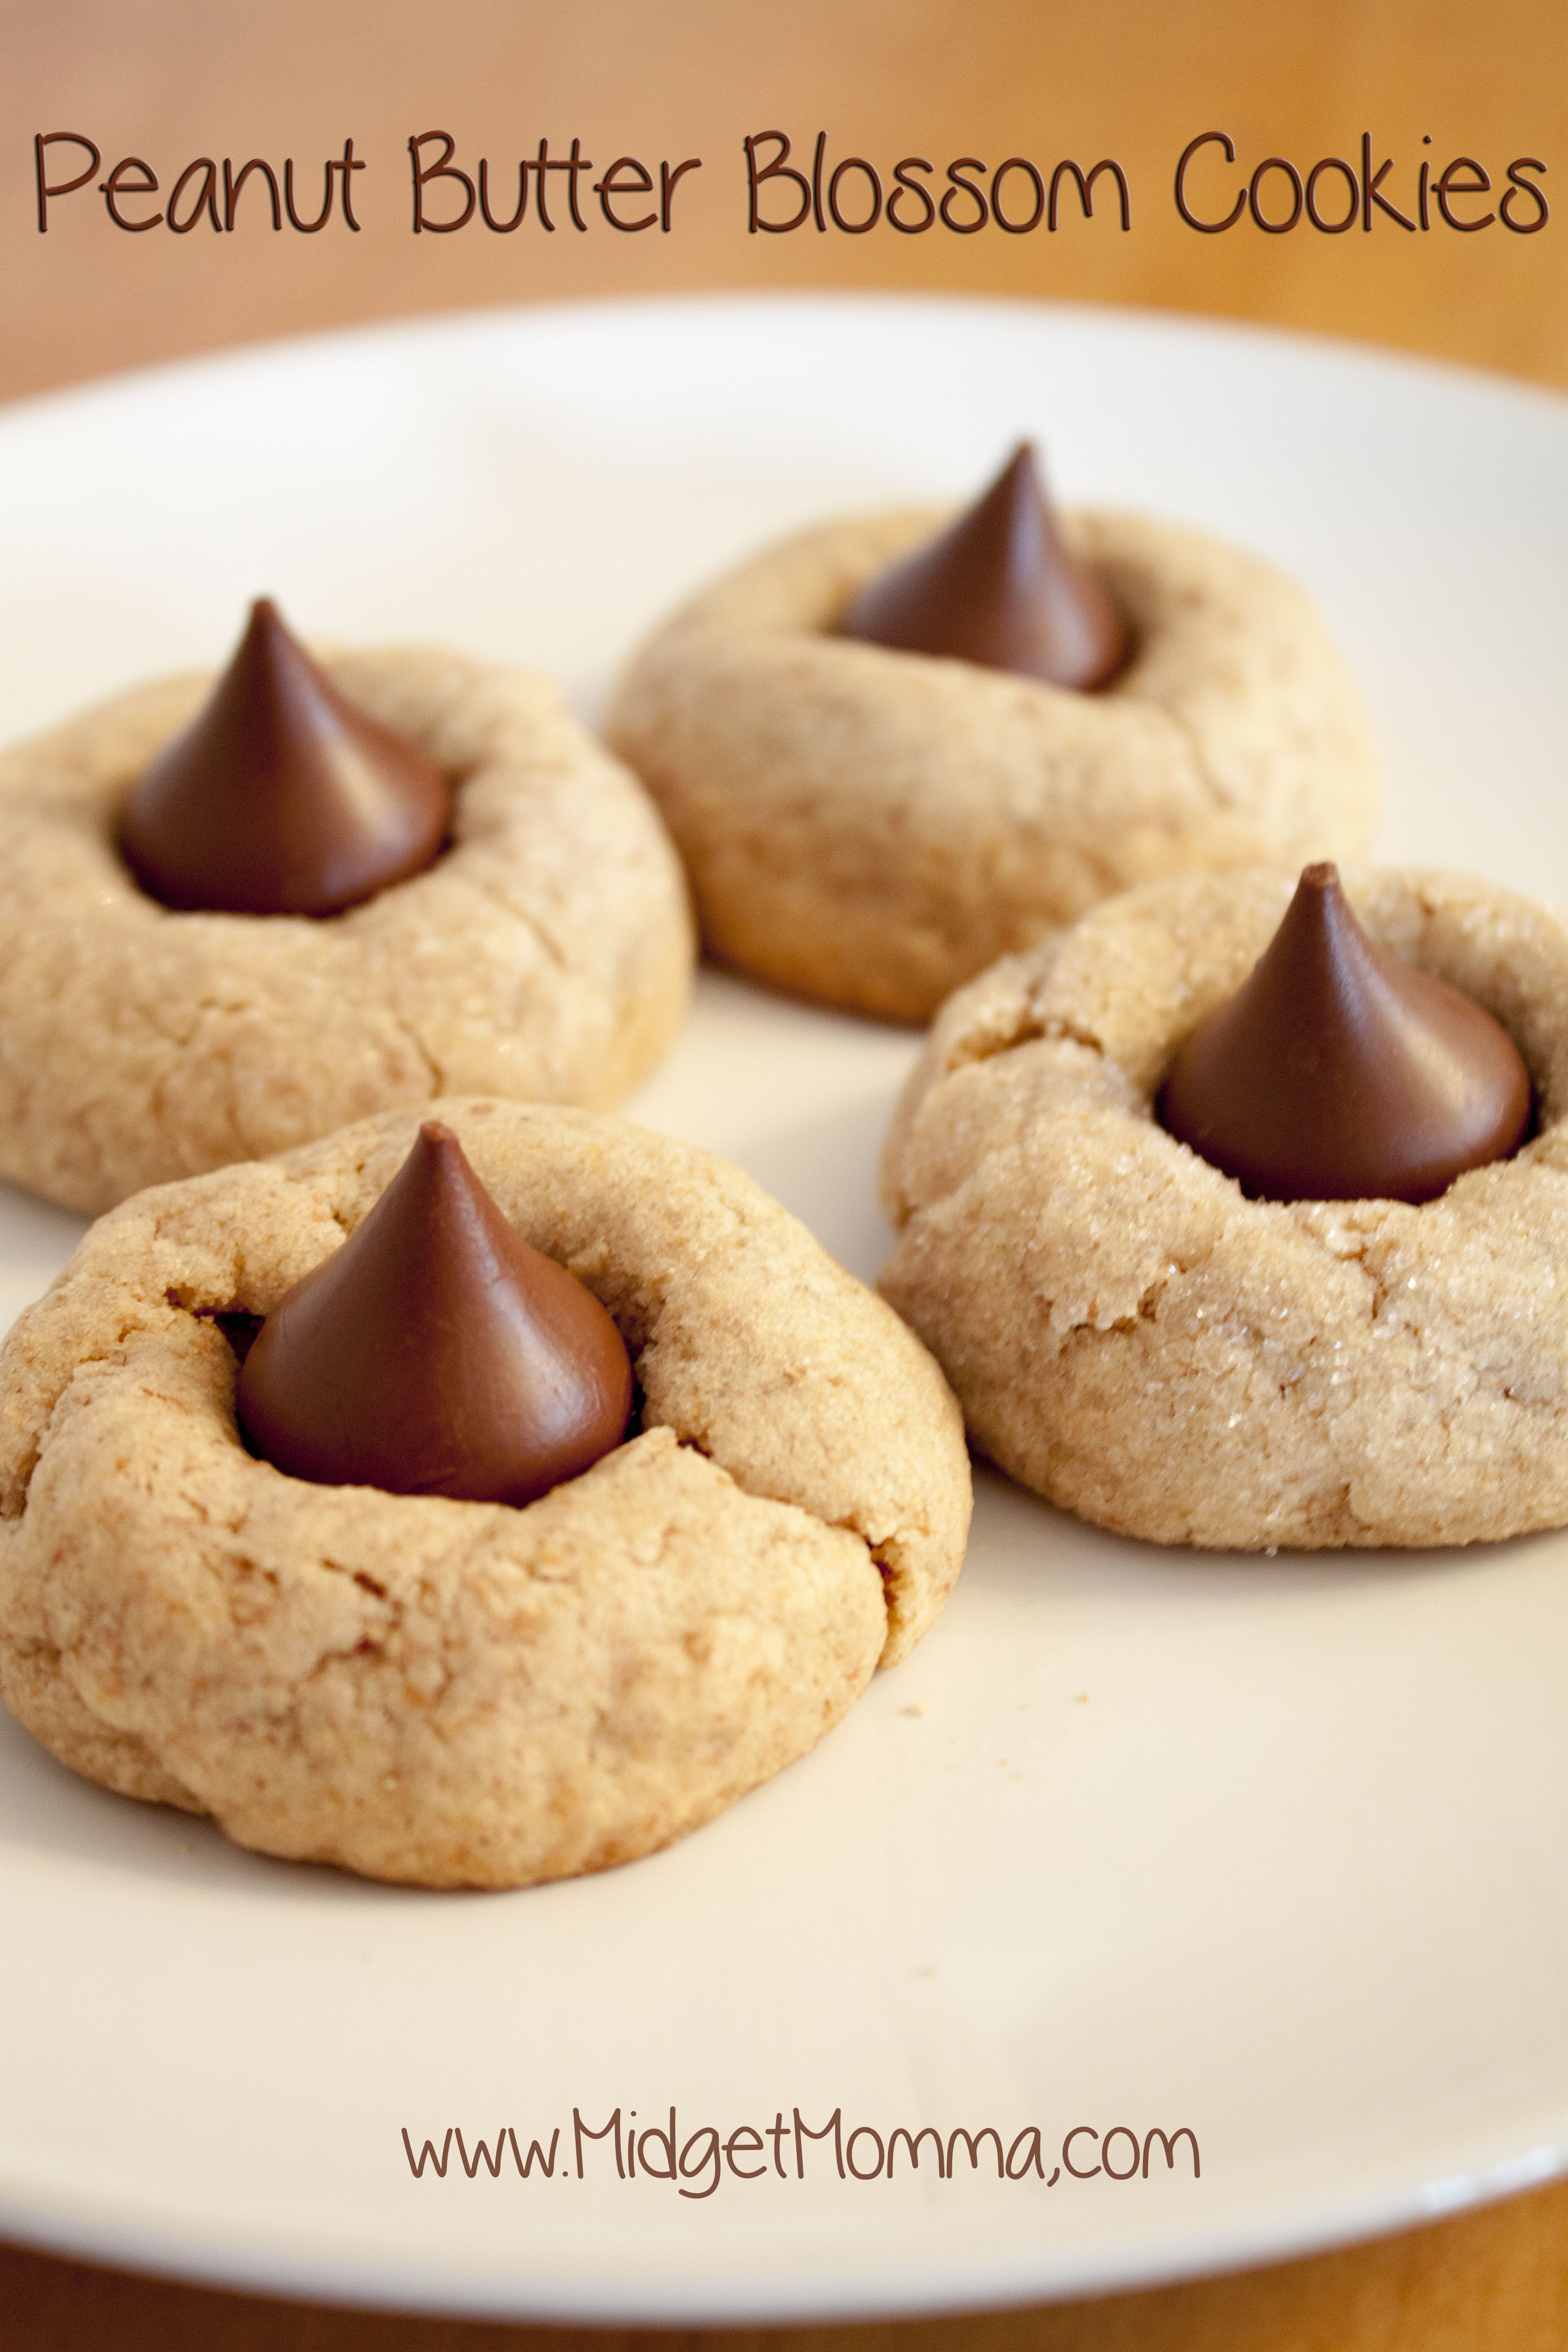 Homemade Peanut Butter Blossom Cookies Recipe